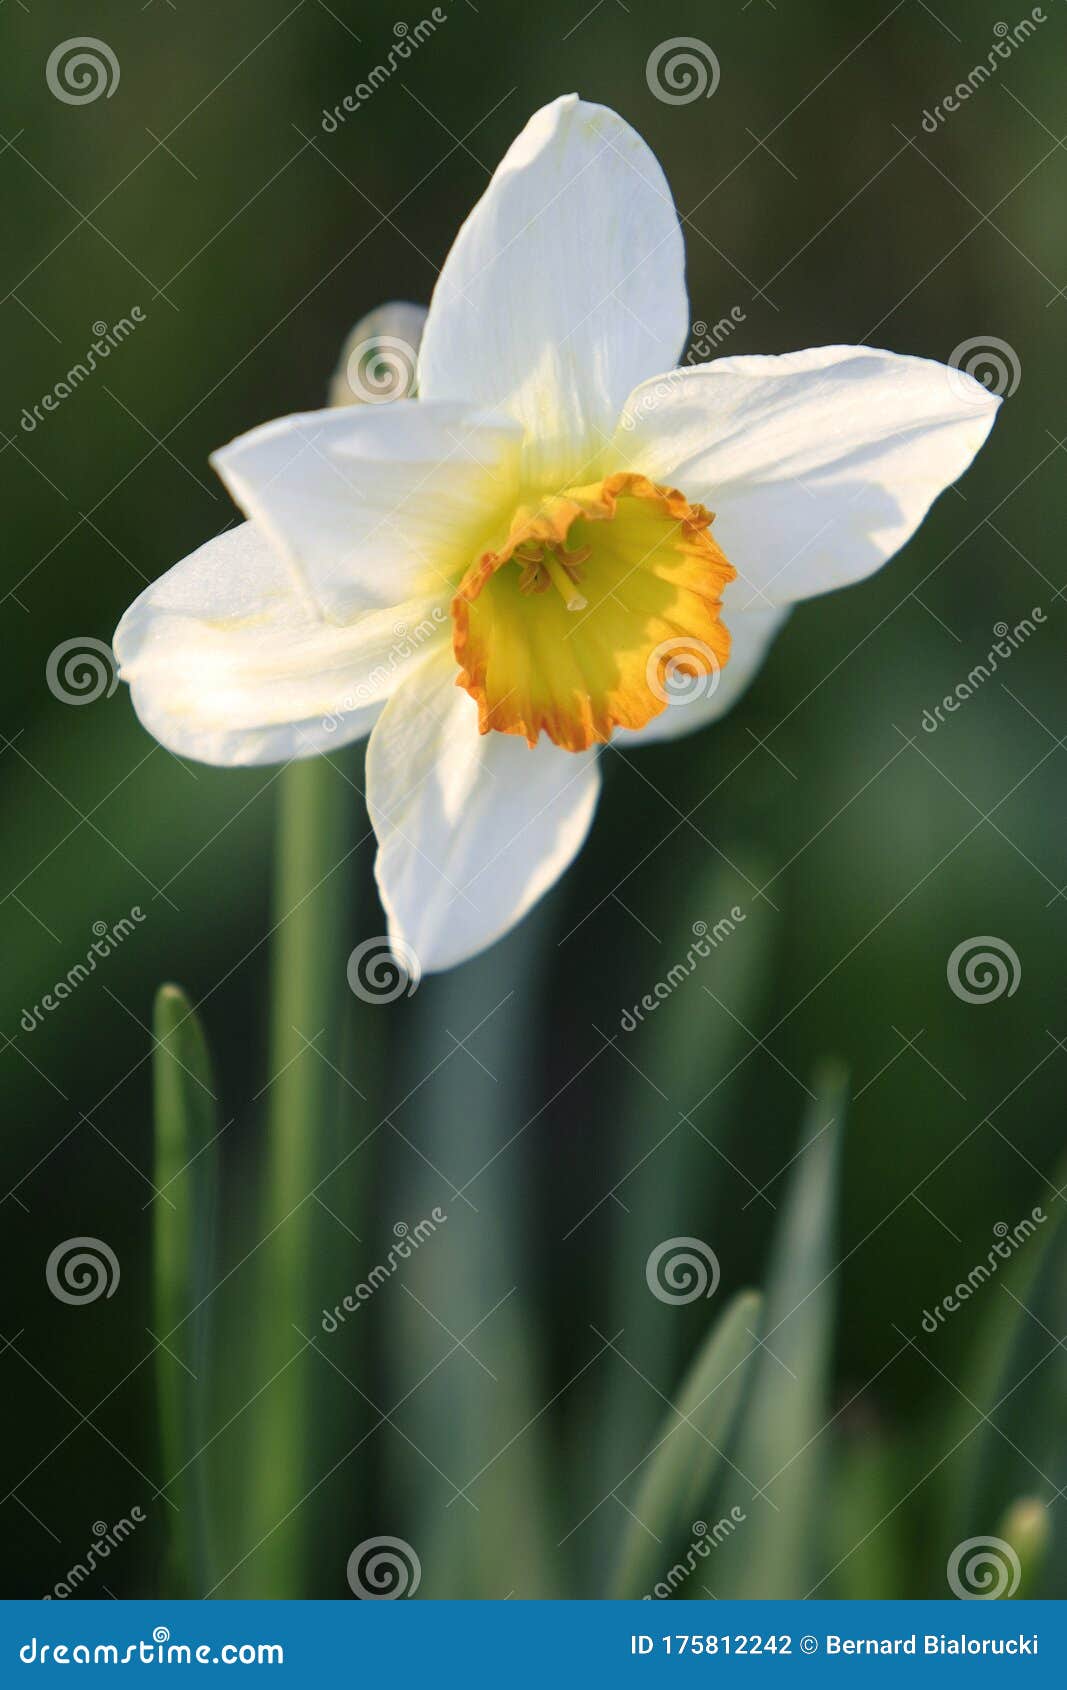 blooming poetÃ¢â¬â¢s narcissus flower, know also as poetÃ¢â¬â¢s daffodil, nargis, phesantÃ¢â¬â¢s eye, findern flower or pinkster lily -